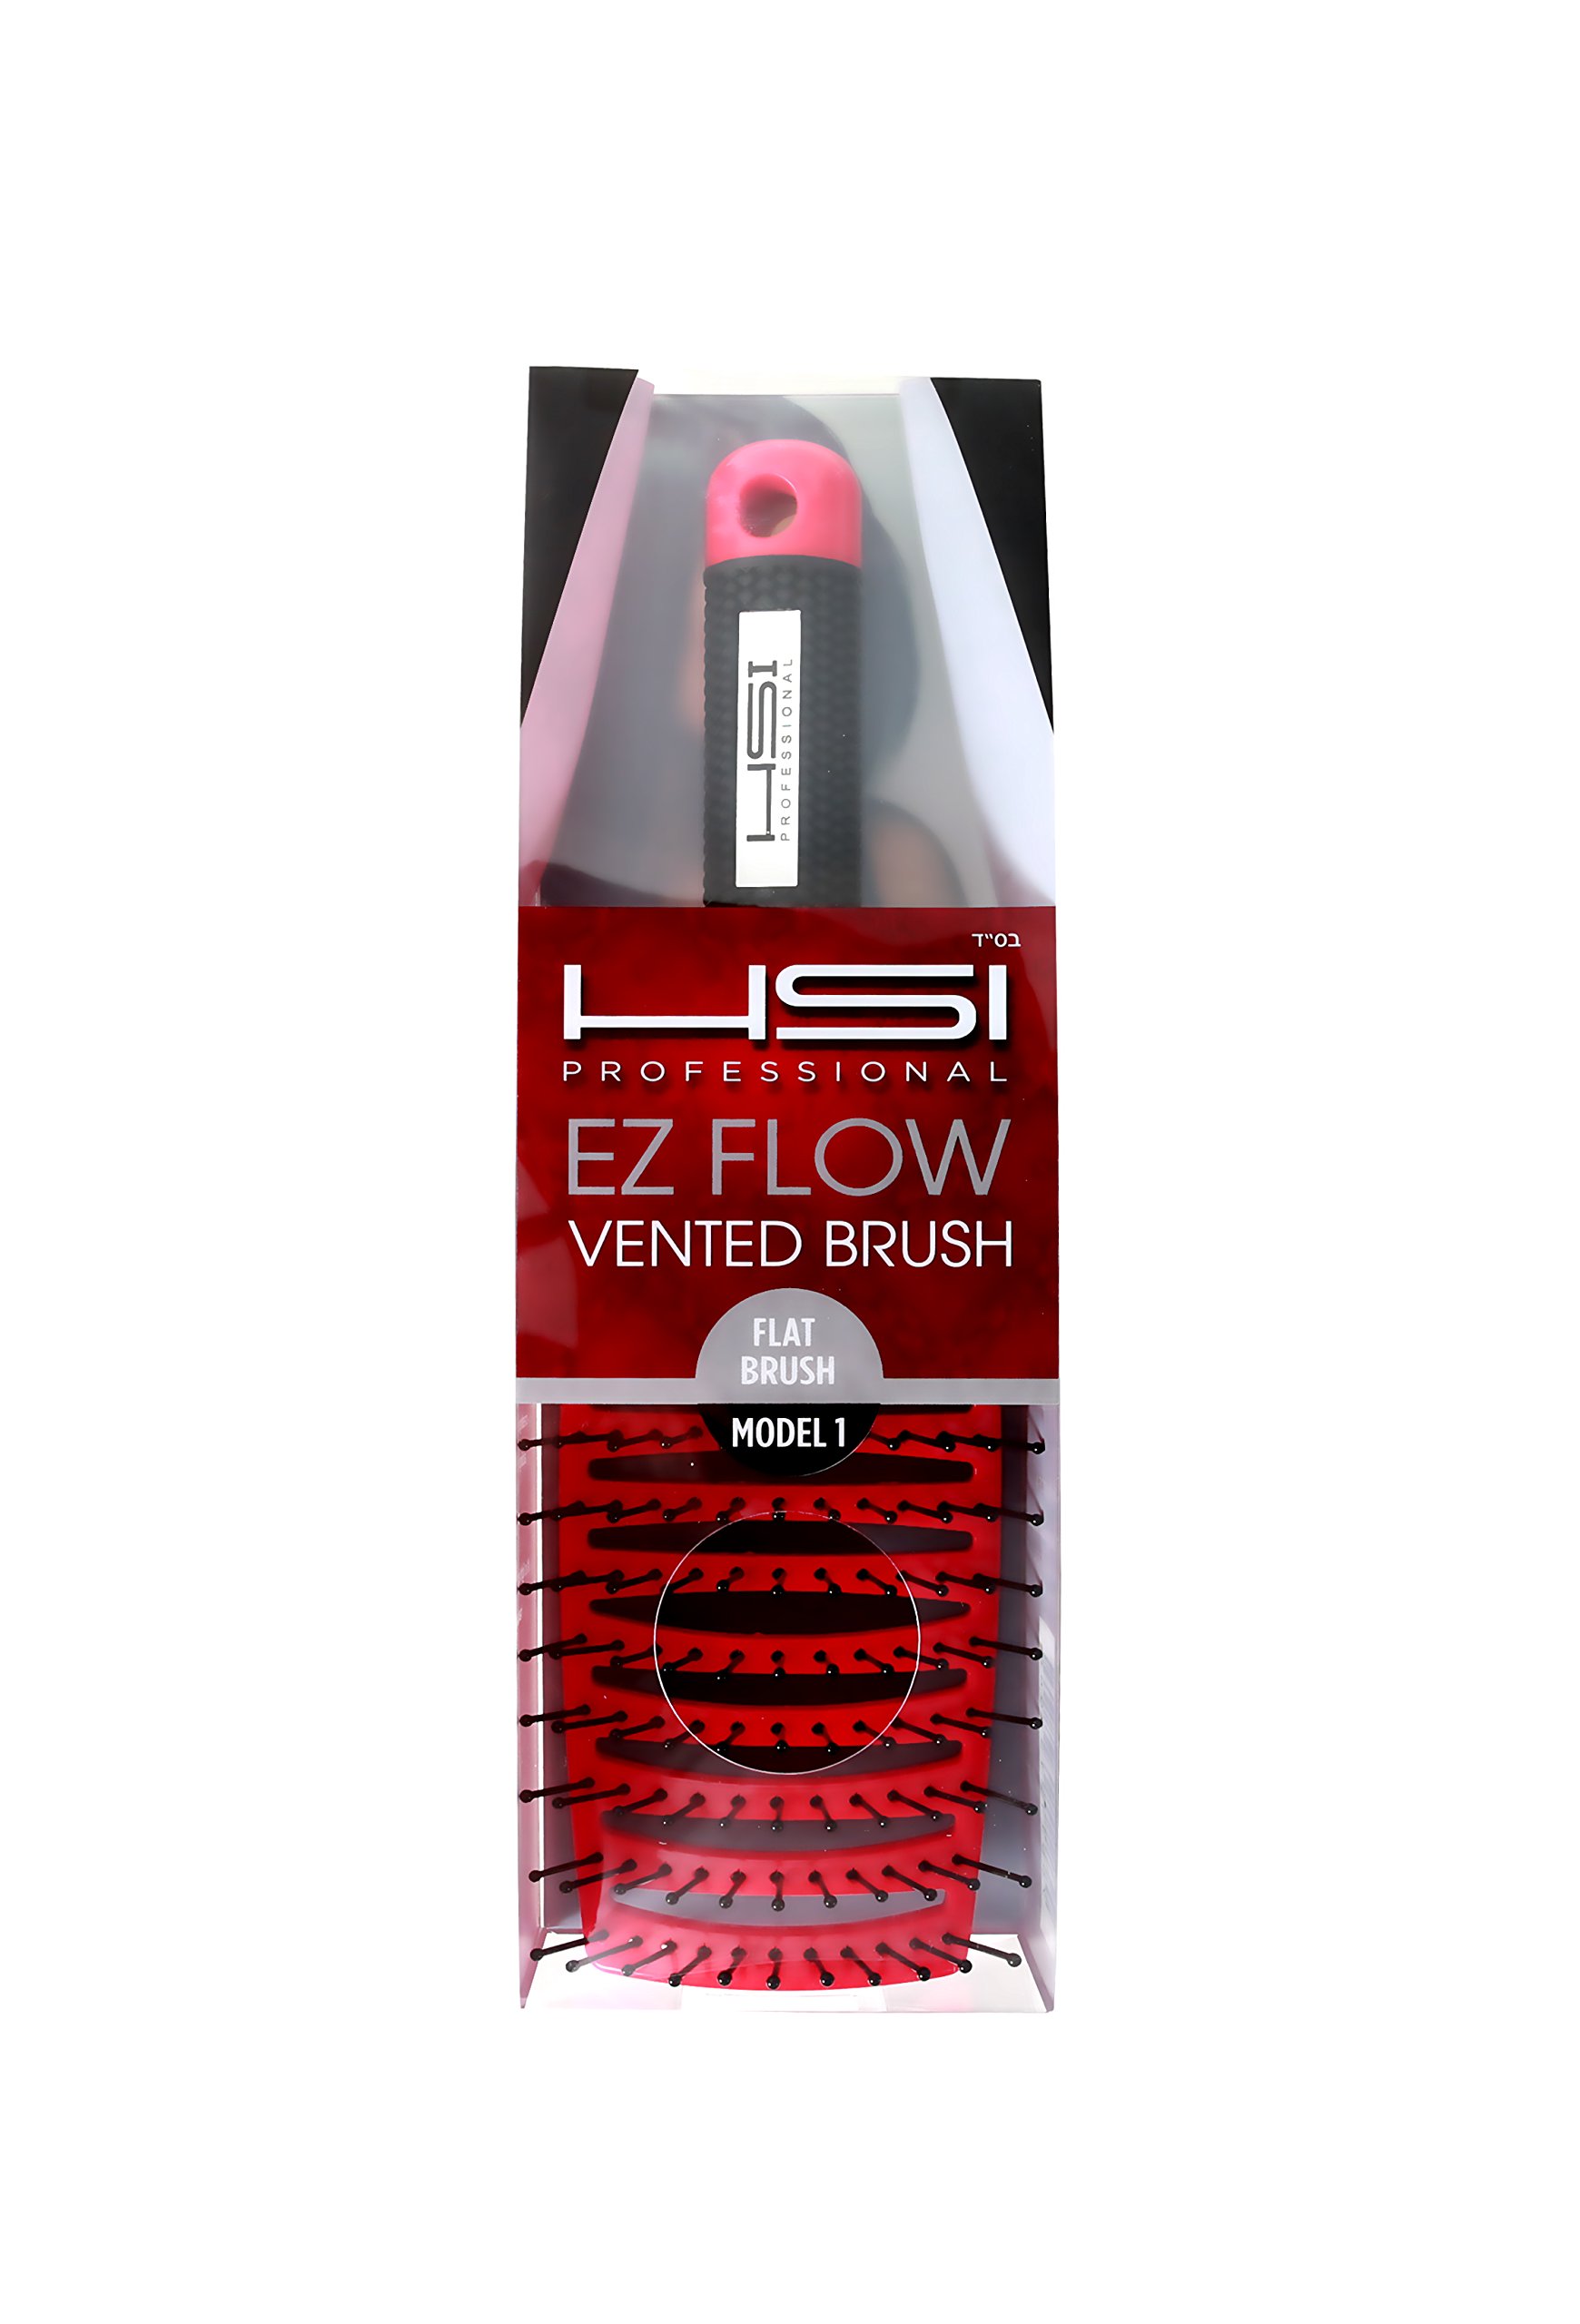 HSI PROFESSIONAL PREMIUM QUALITY EZ FLOW VENTED HAIR Detangling Brush GLIDE Thru Detangler for Wet and dry, SUPER SOFT FLEXIBLE IONIC BRISTLES, An AMAZING BRUSH